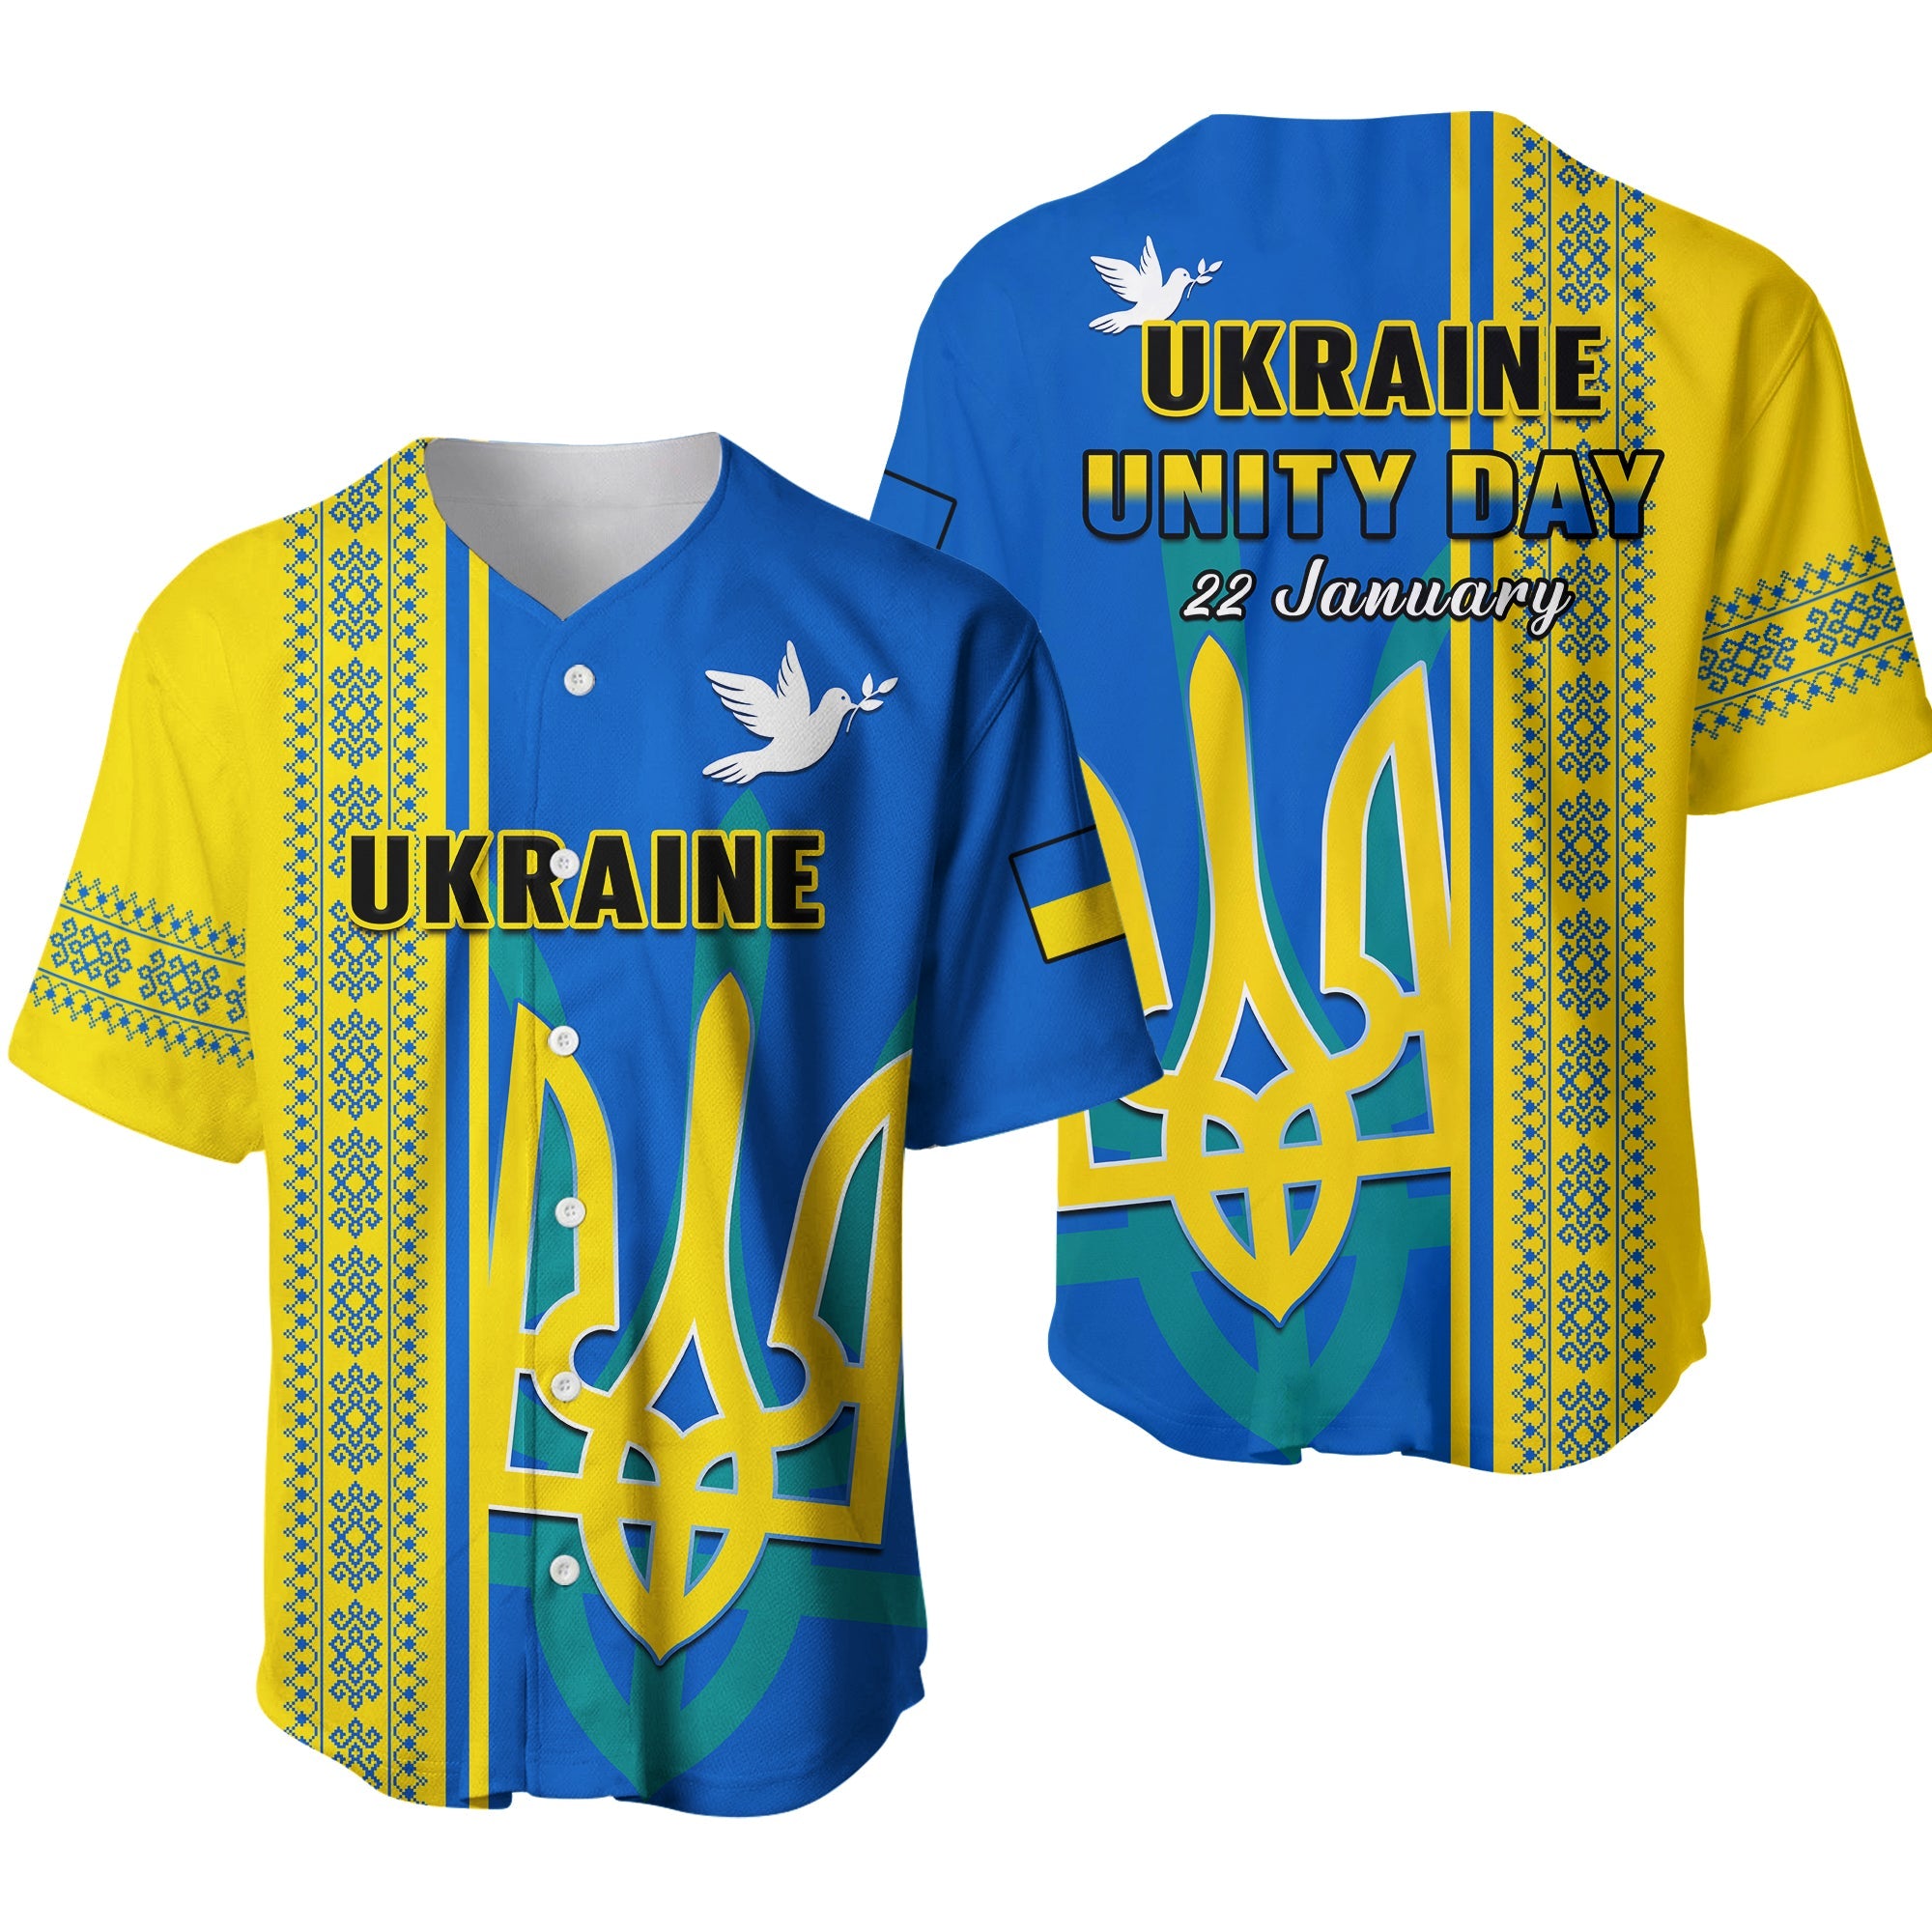 ukraine-unity-day-baseball-jersey-vyshyvanka-ukrainian-coat-of-arms-ver01